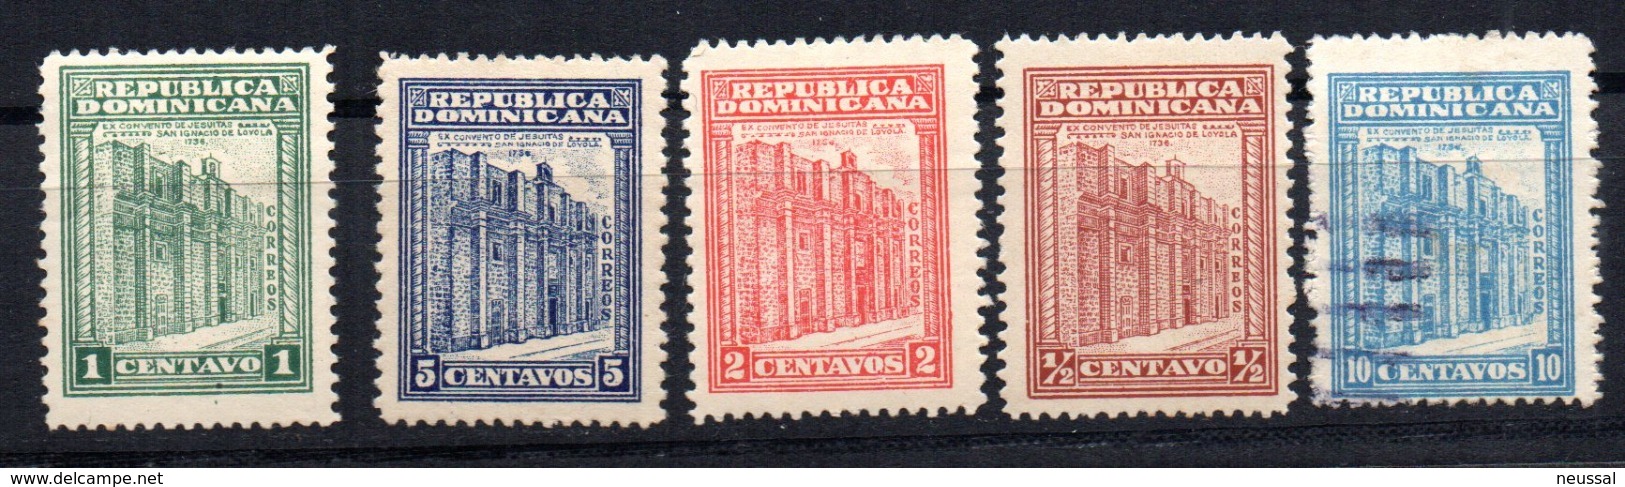 Serie Nº 228/32  Republica Dominicana - República Dominicana